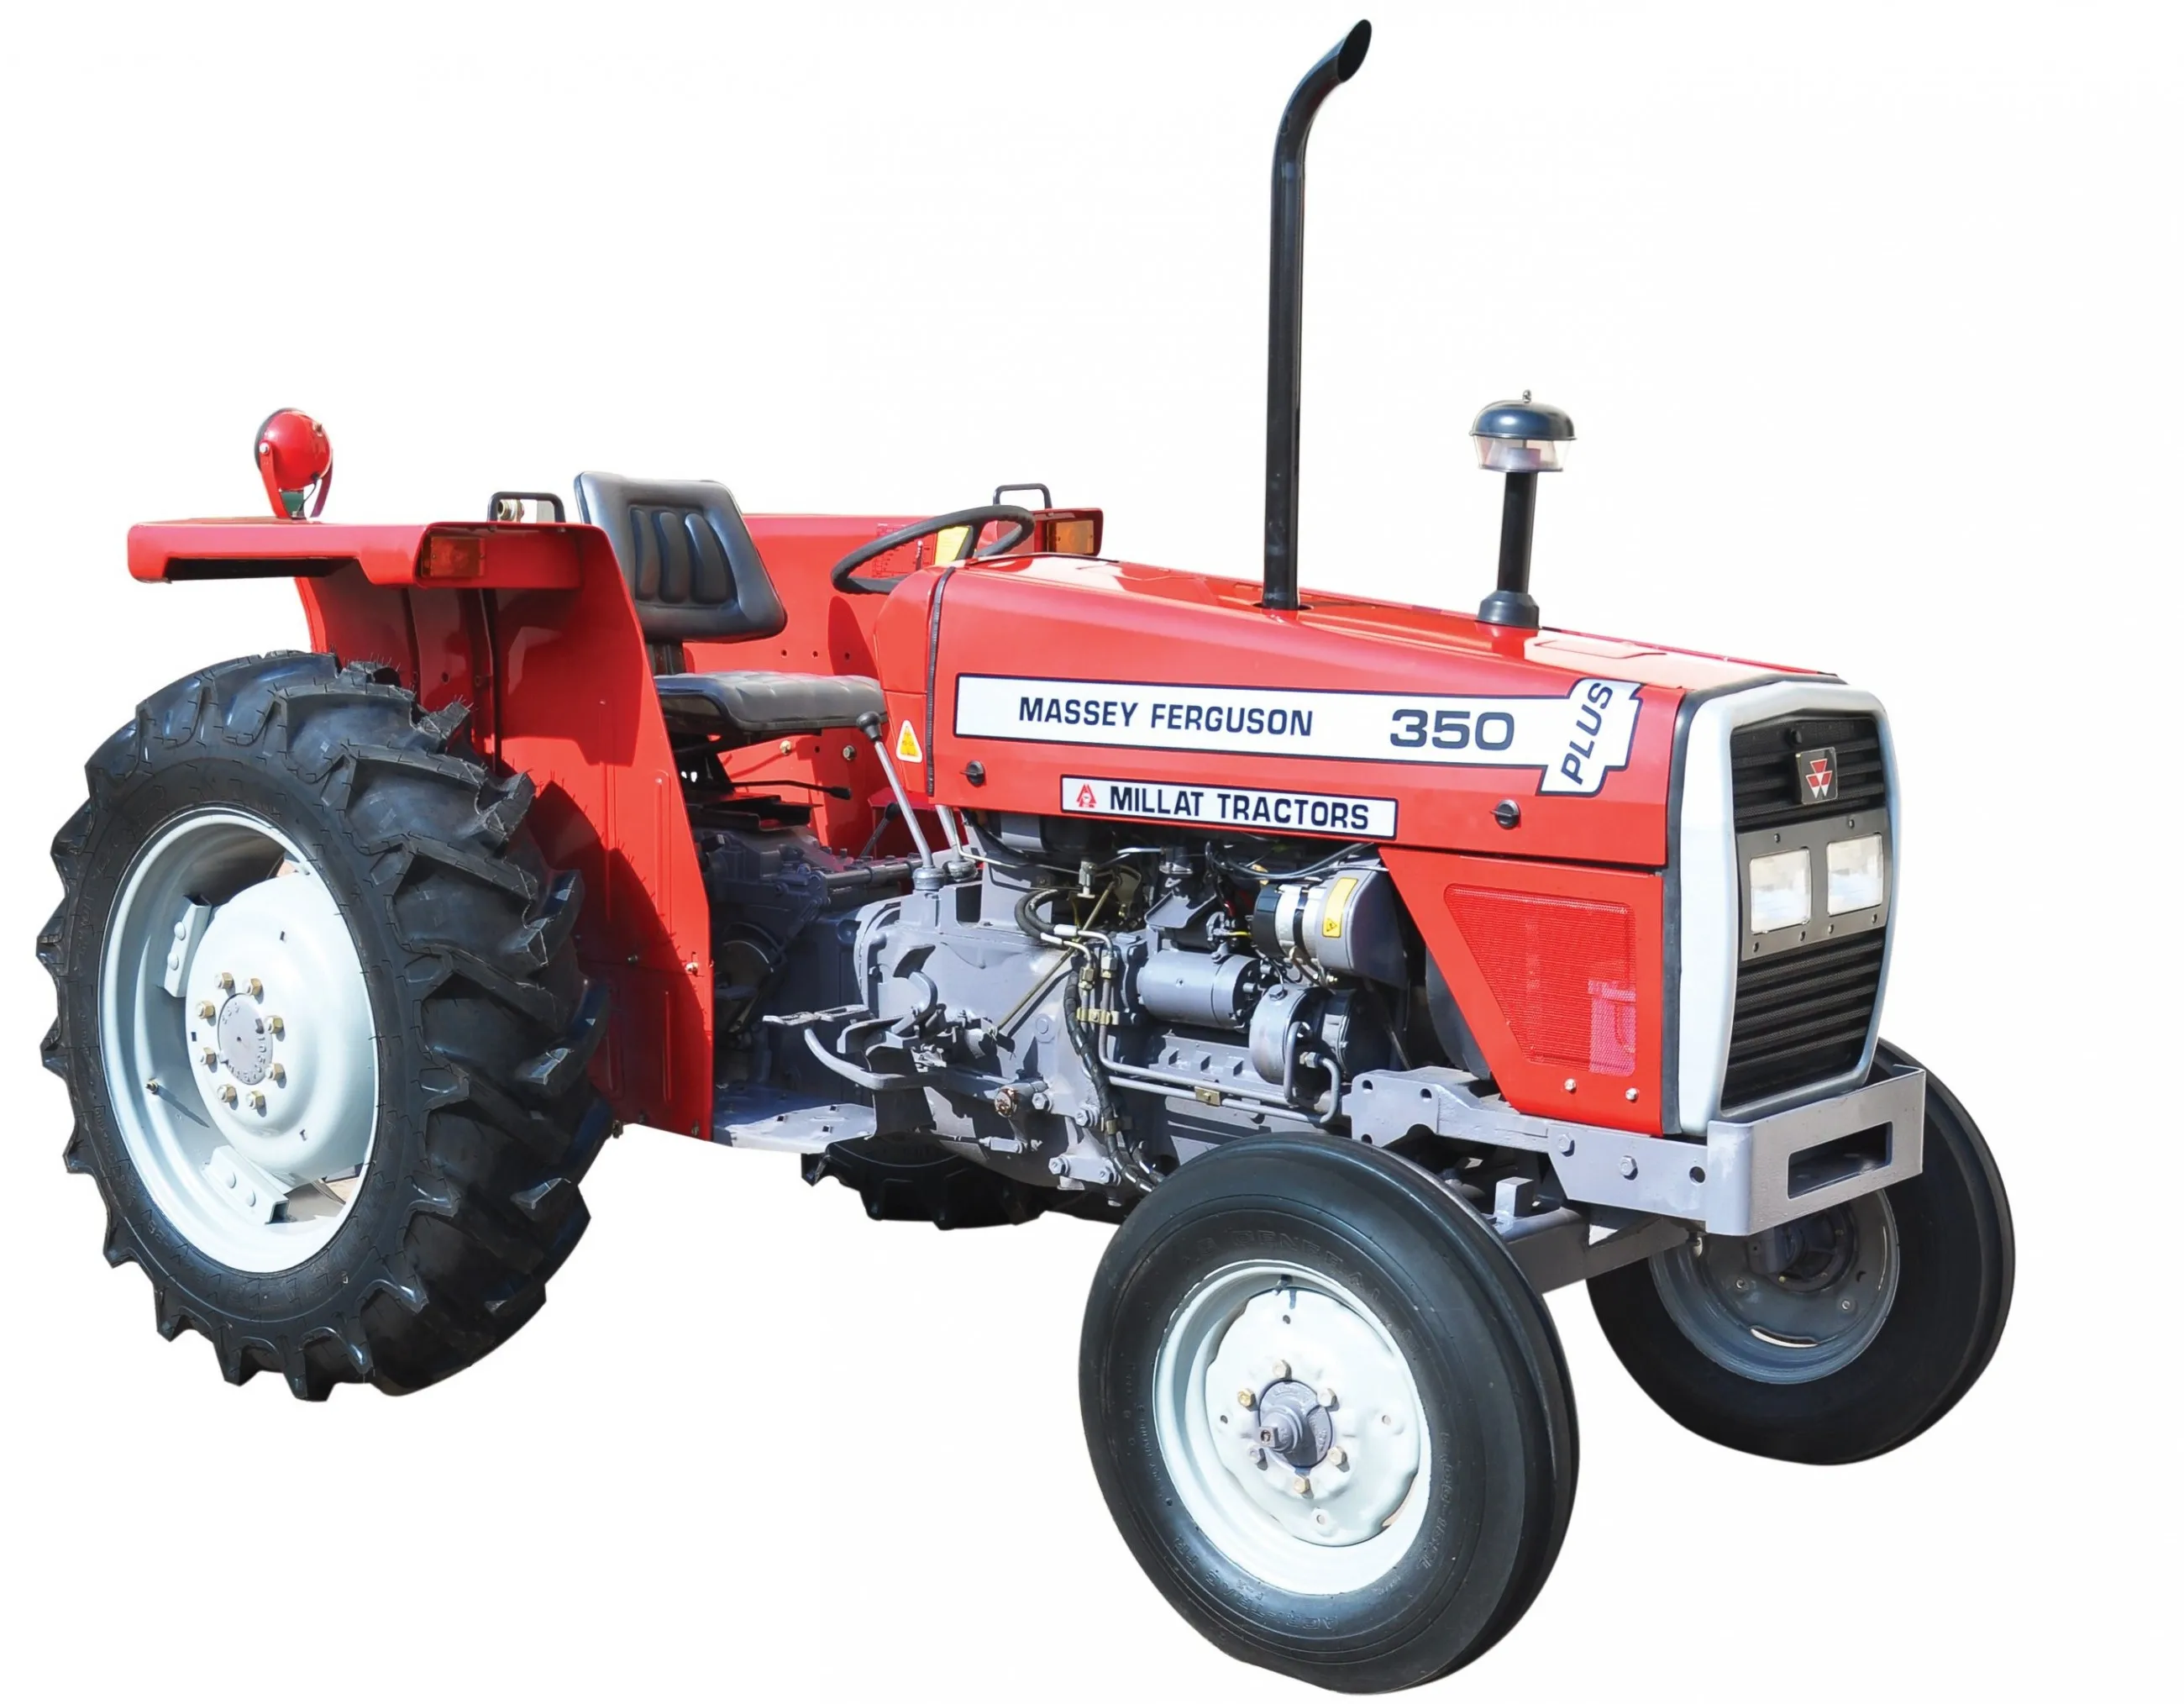 
massey ferguson mf 240 tractor(brand new tractor) 